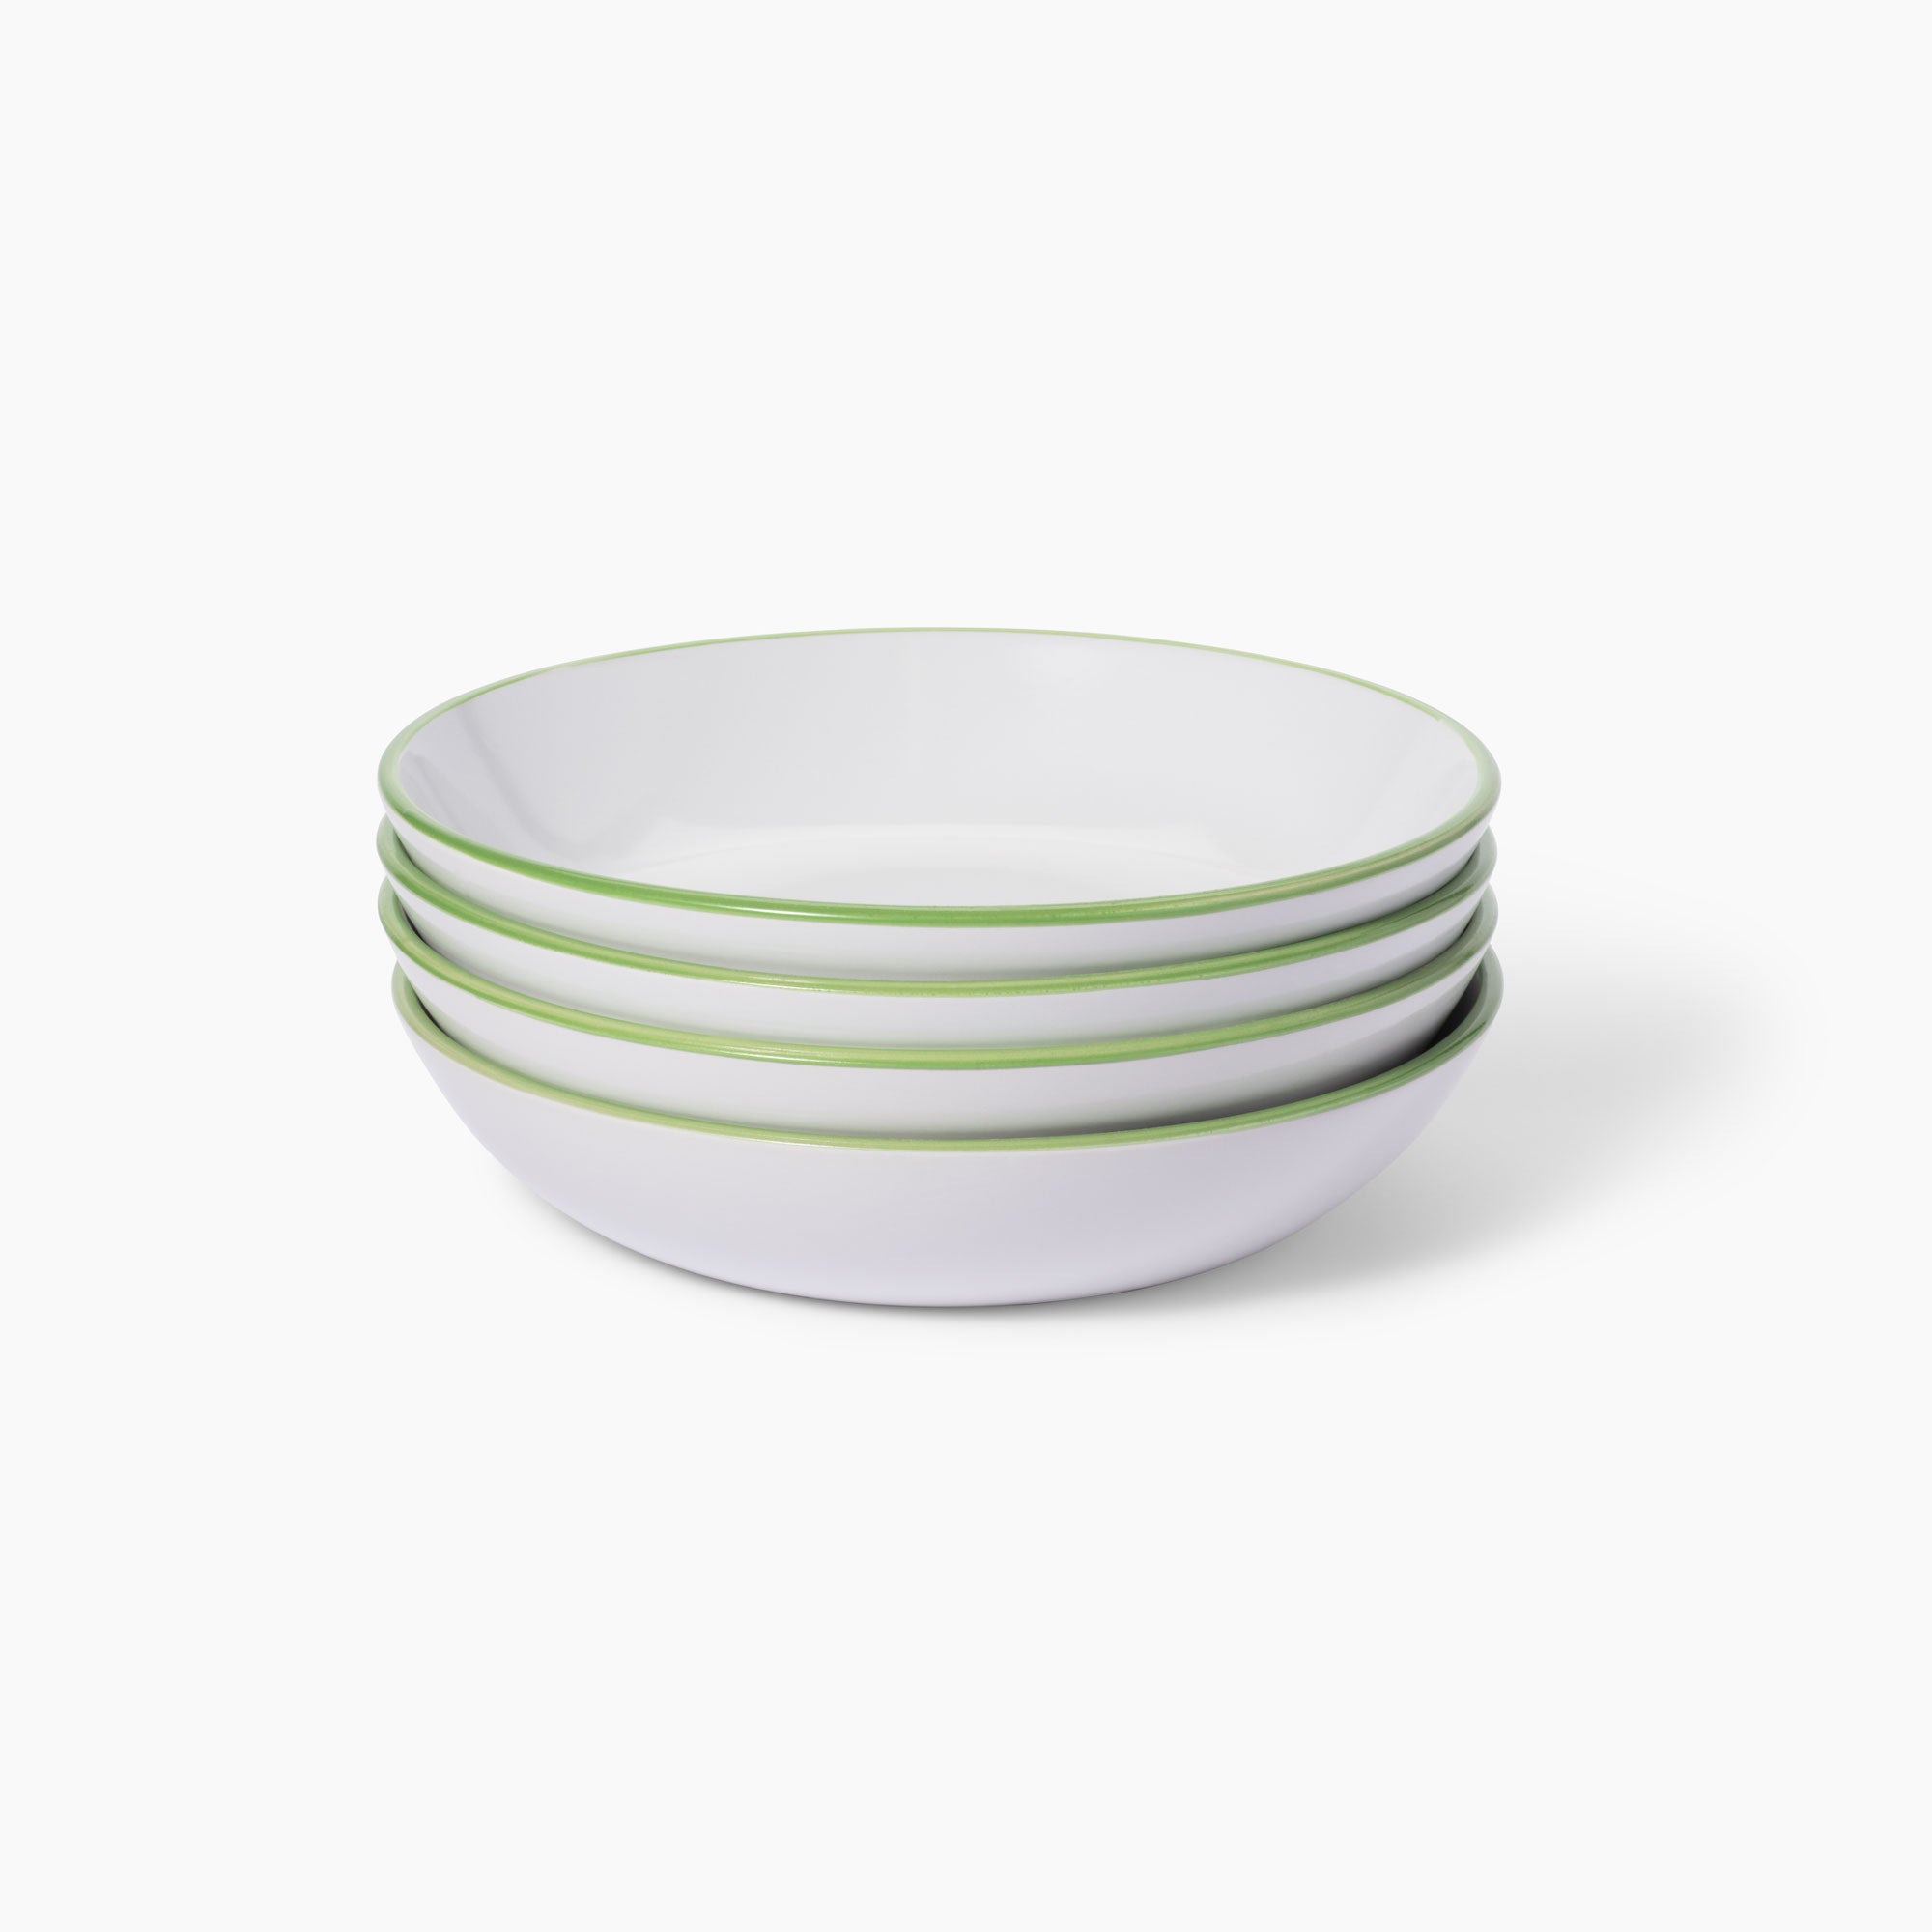 Leeway Dish - set of 4